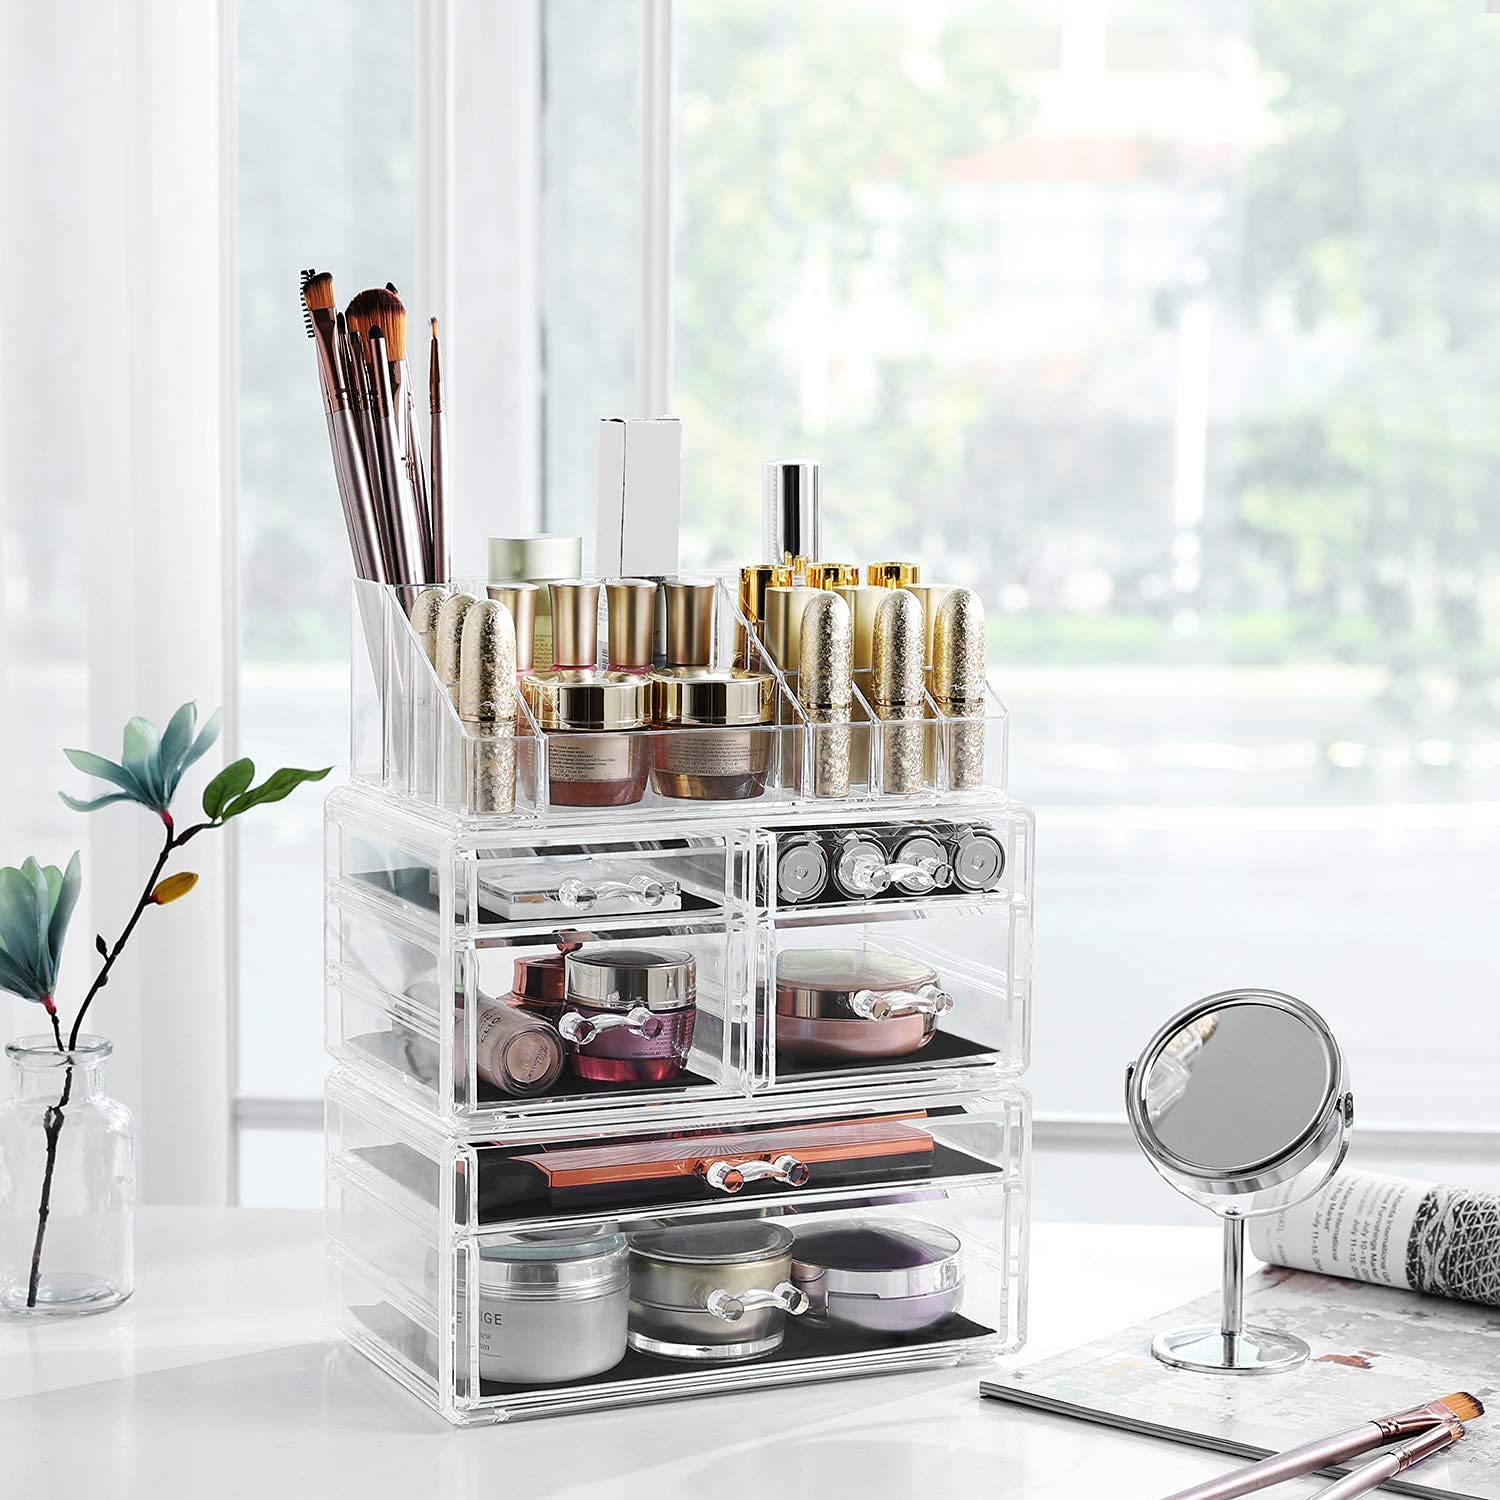 Nancy's Bushy Lake Make-Up Opslag - Cosmetica Organizer - Make-Up Doos - Acryl - 2 Delen - 6 Lades - Transparant/Wit - 24 x 30 x 13,5 cm